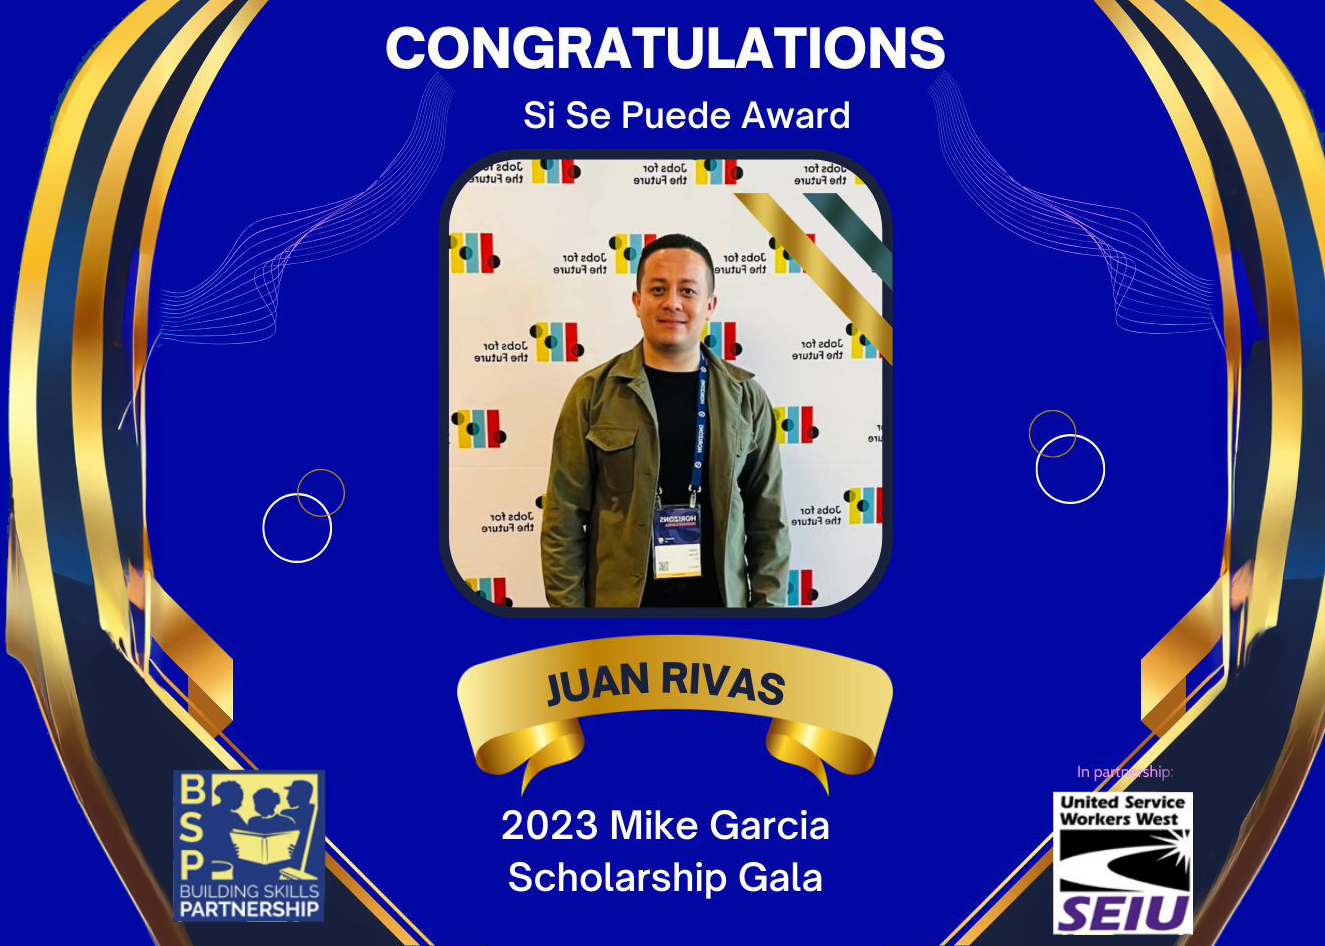 Congratulations Juan Rivas - Se Se Puede Award - 2023 Mike Garcia Scholarship Gala - Building Skills Partnership in partnership with SEIU United Service Workers West